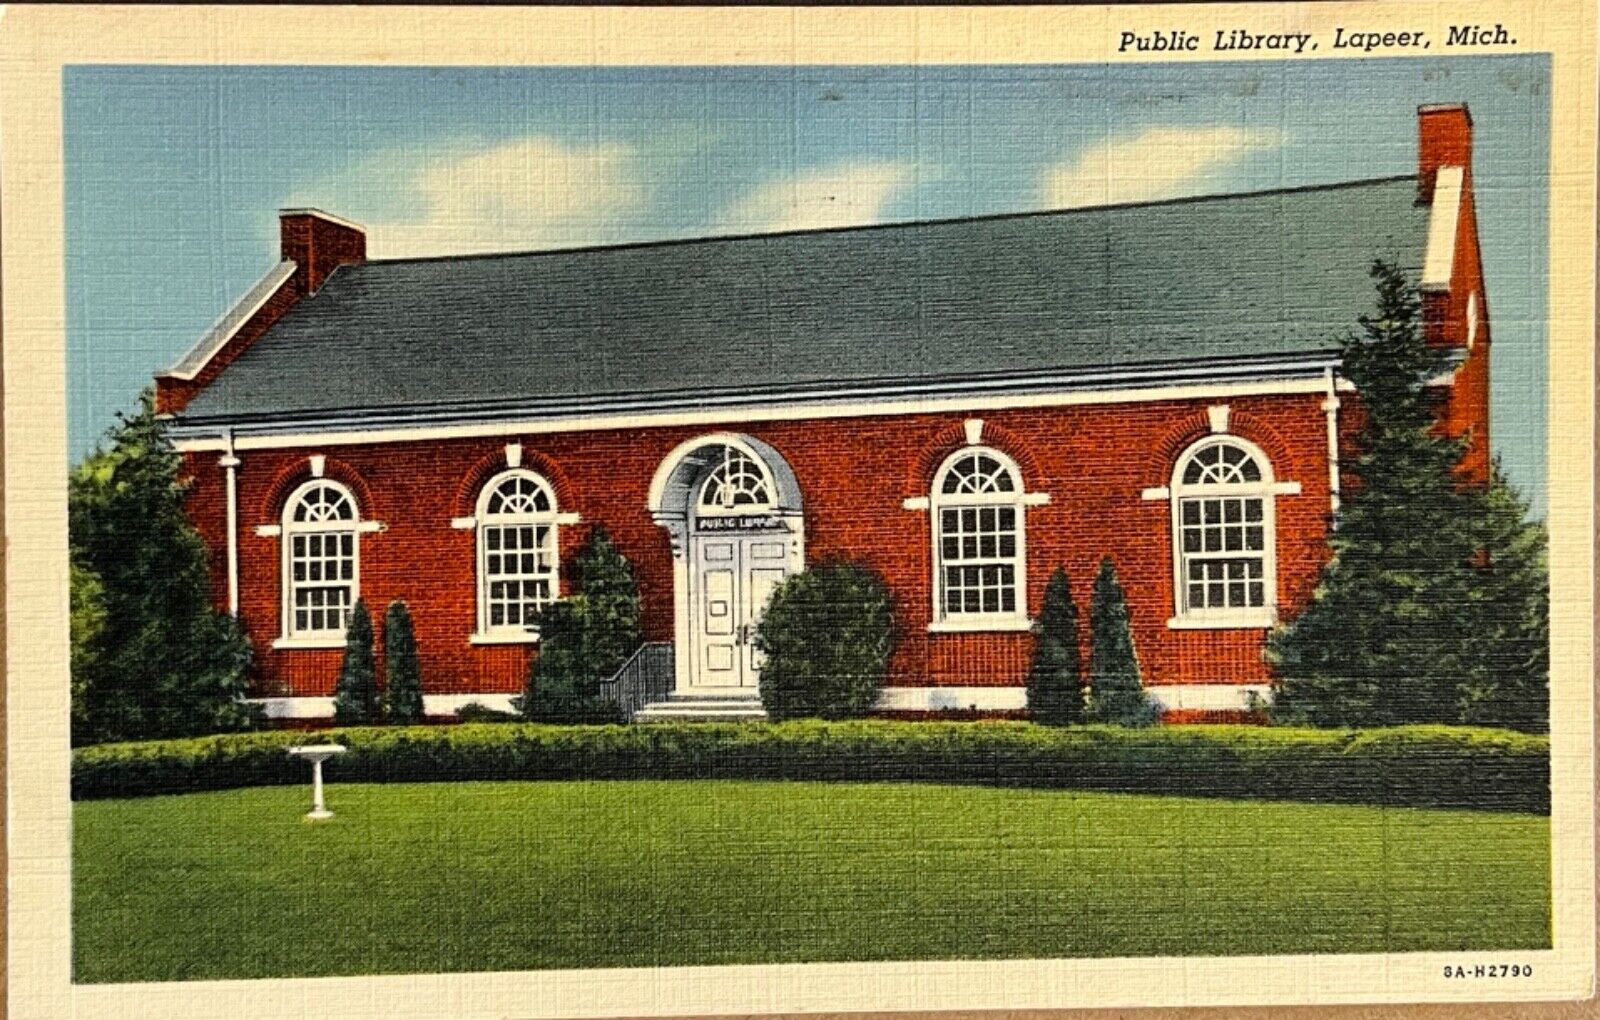 Lapéer Michigan Public Library Postcard c1930